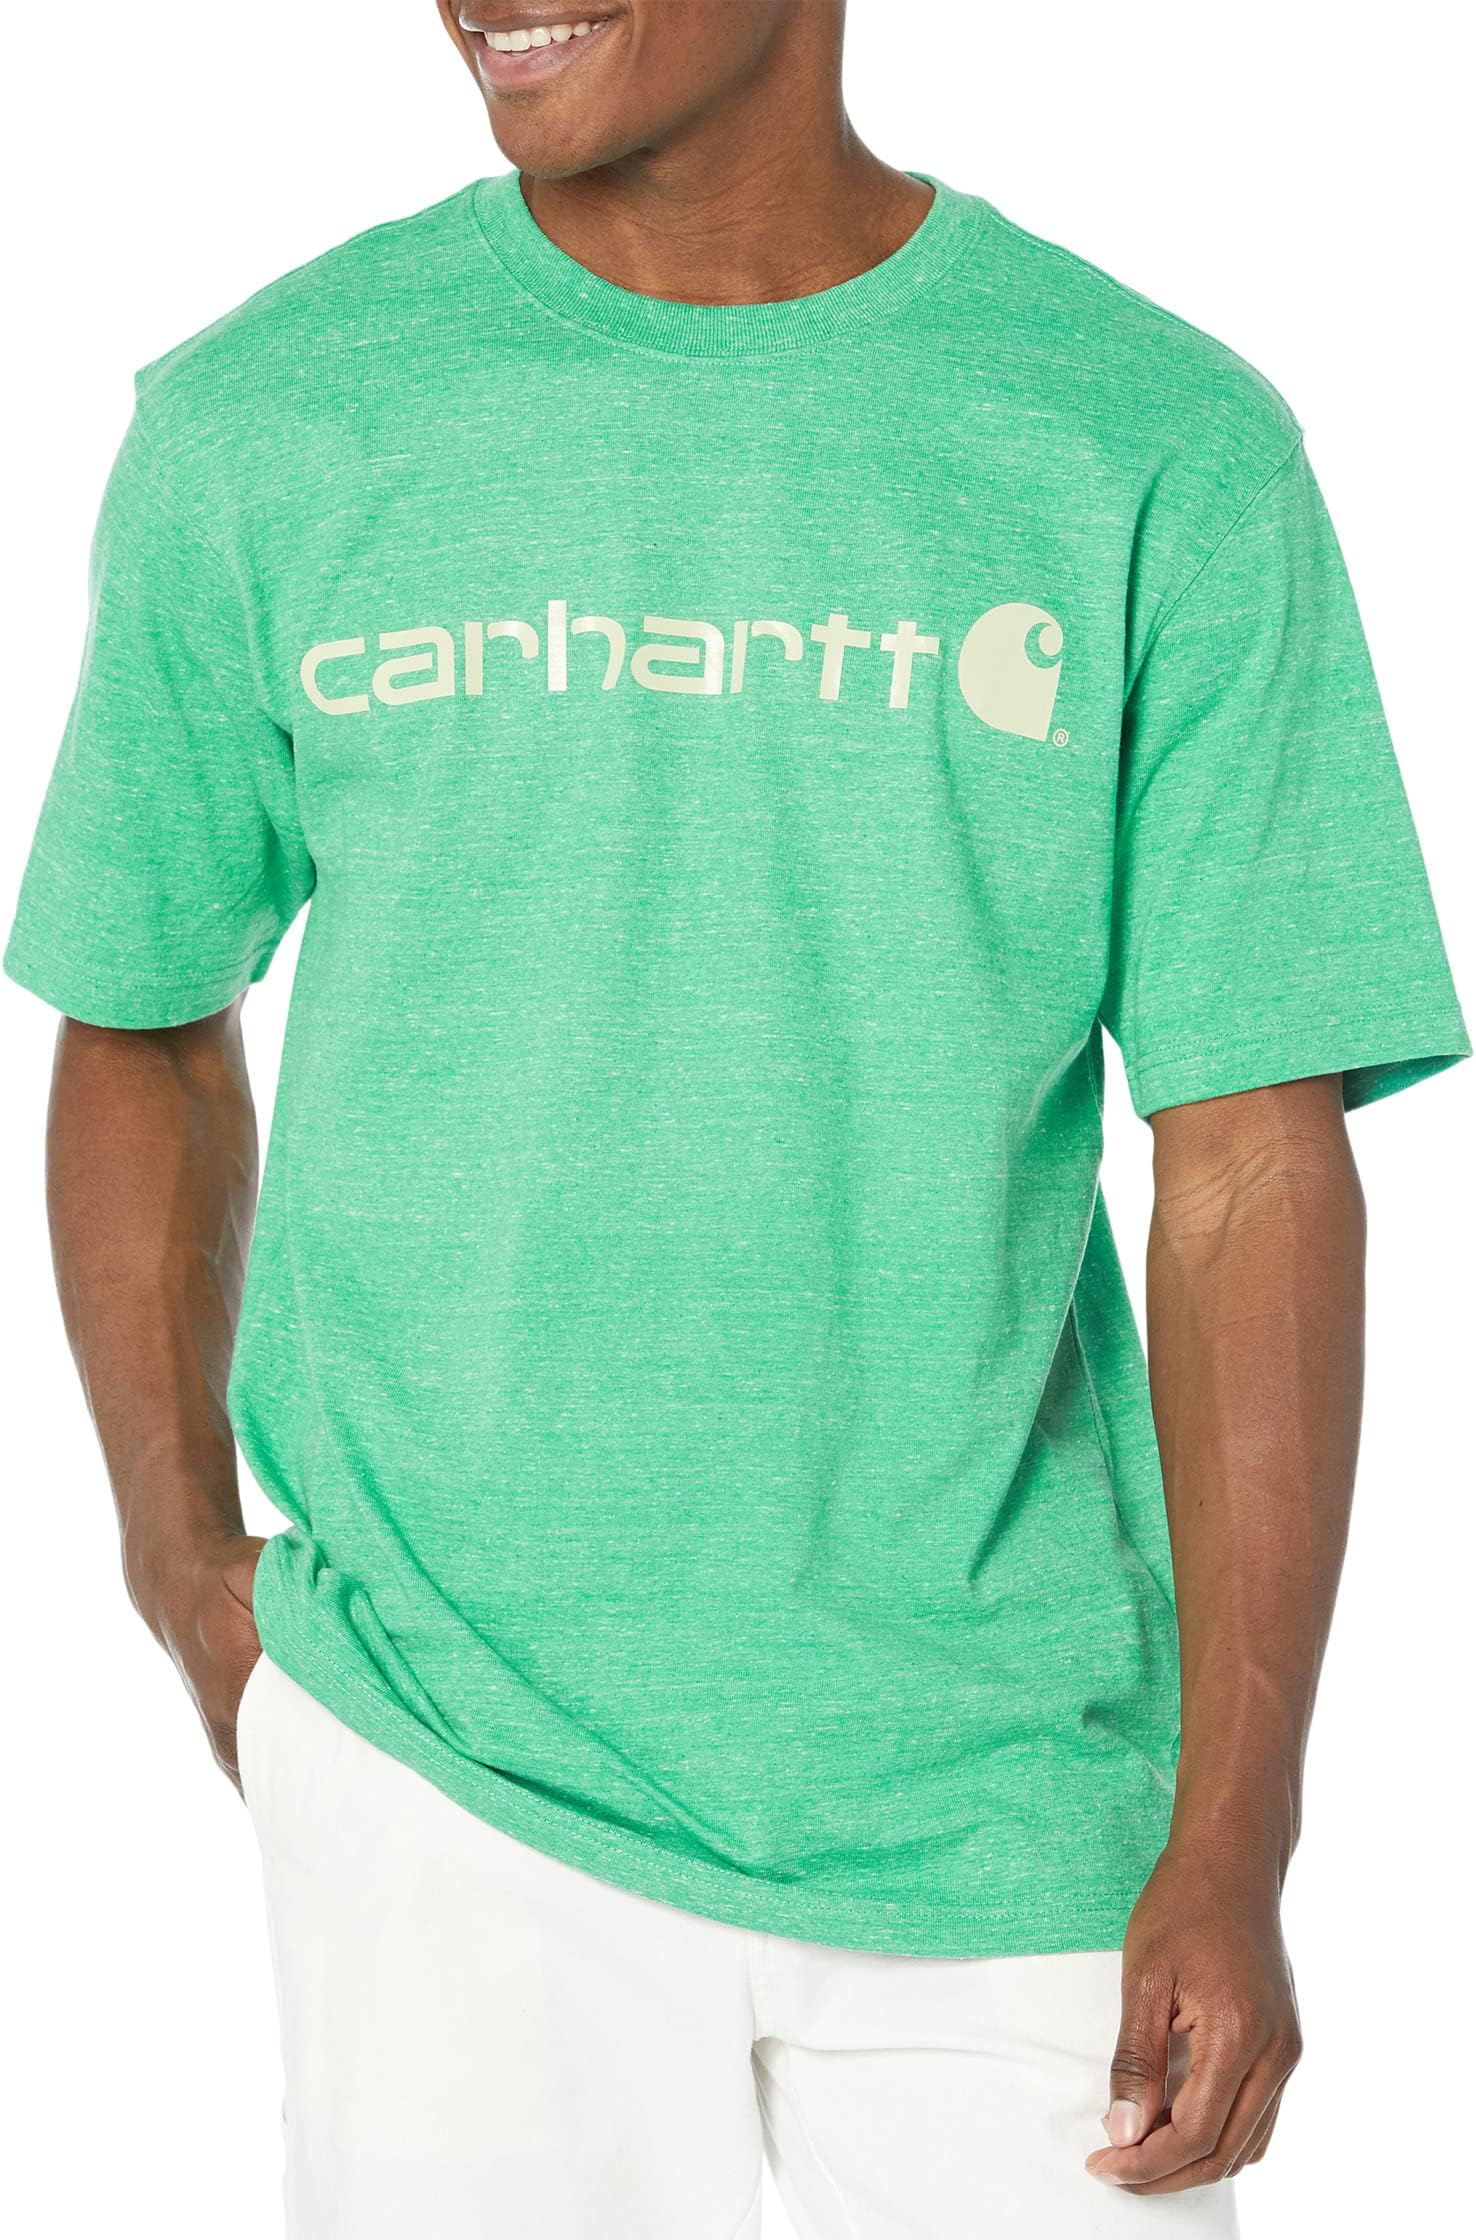 Футболка с фирменным логотипом (S/S) Carhartt, цвет Malachite Snow Heather футболка с фирменным логотипом s s carhartt цвет marmalade heather